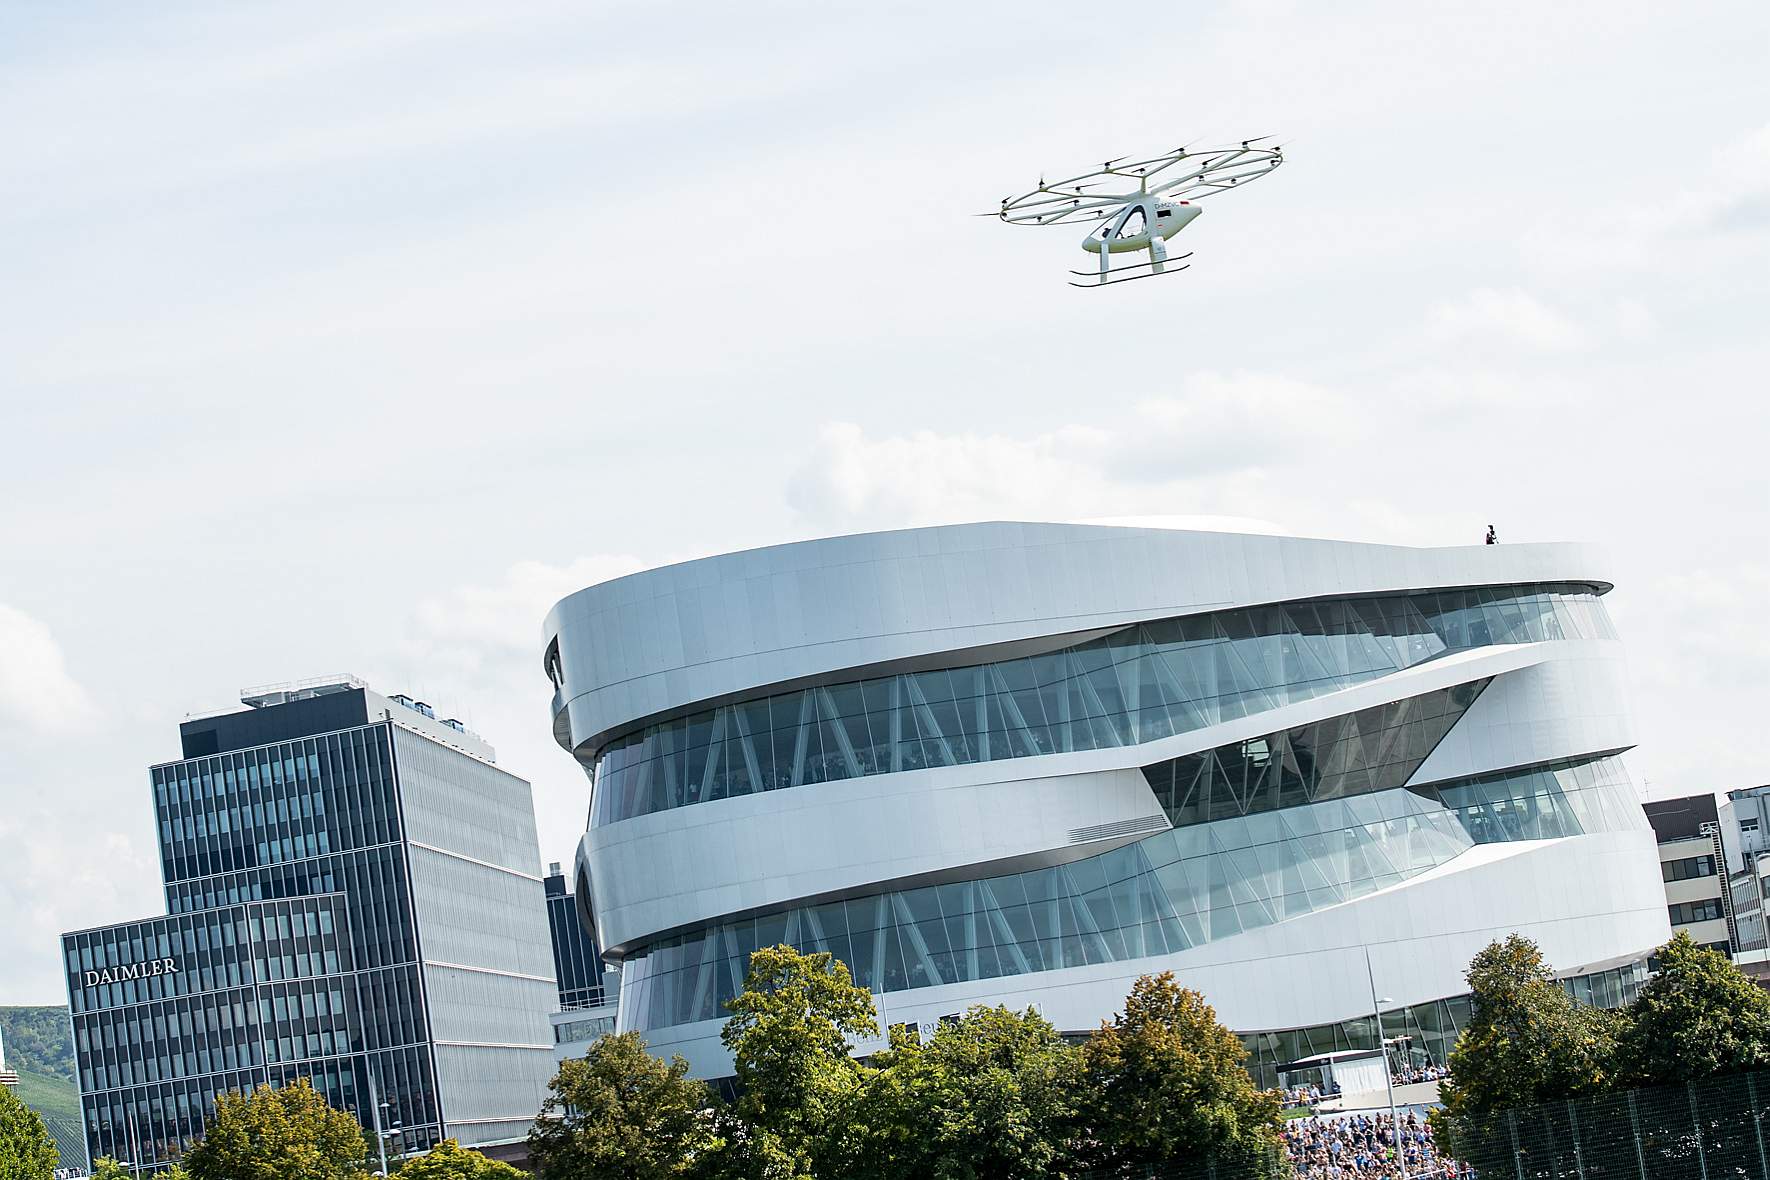 Exklusiv vor dem Mercedes-Benz Museum in Stuttgart: Erster erfolgreicher urbaner Flug des Volocopter in Europa.

Stuttgart sees first urban flight of Volocopter in Europe